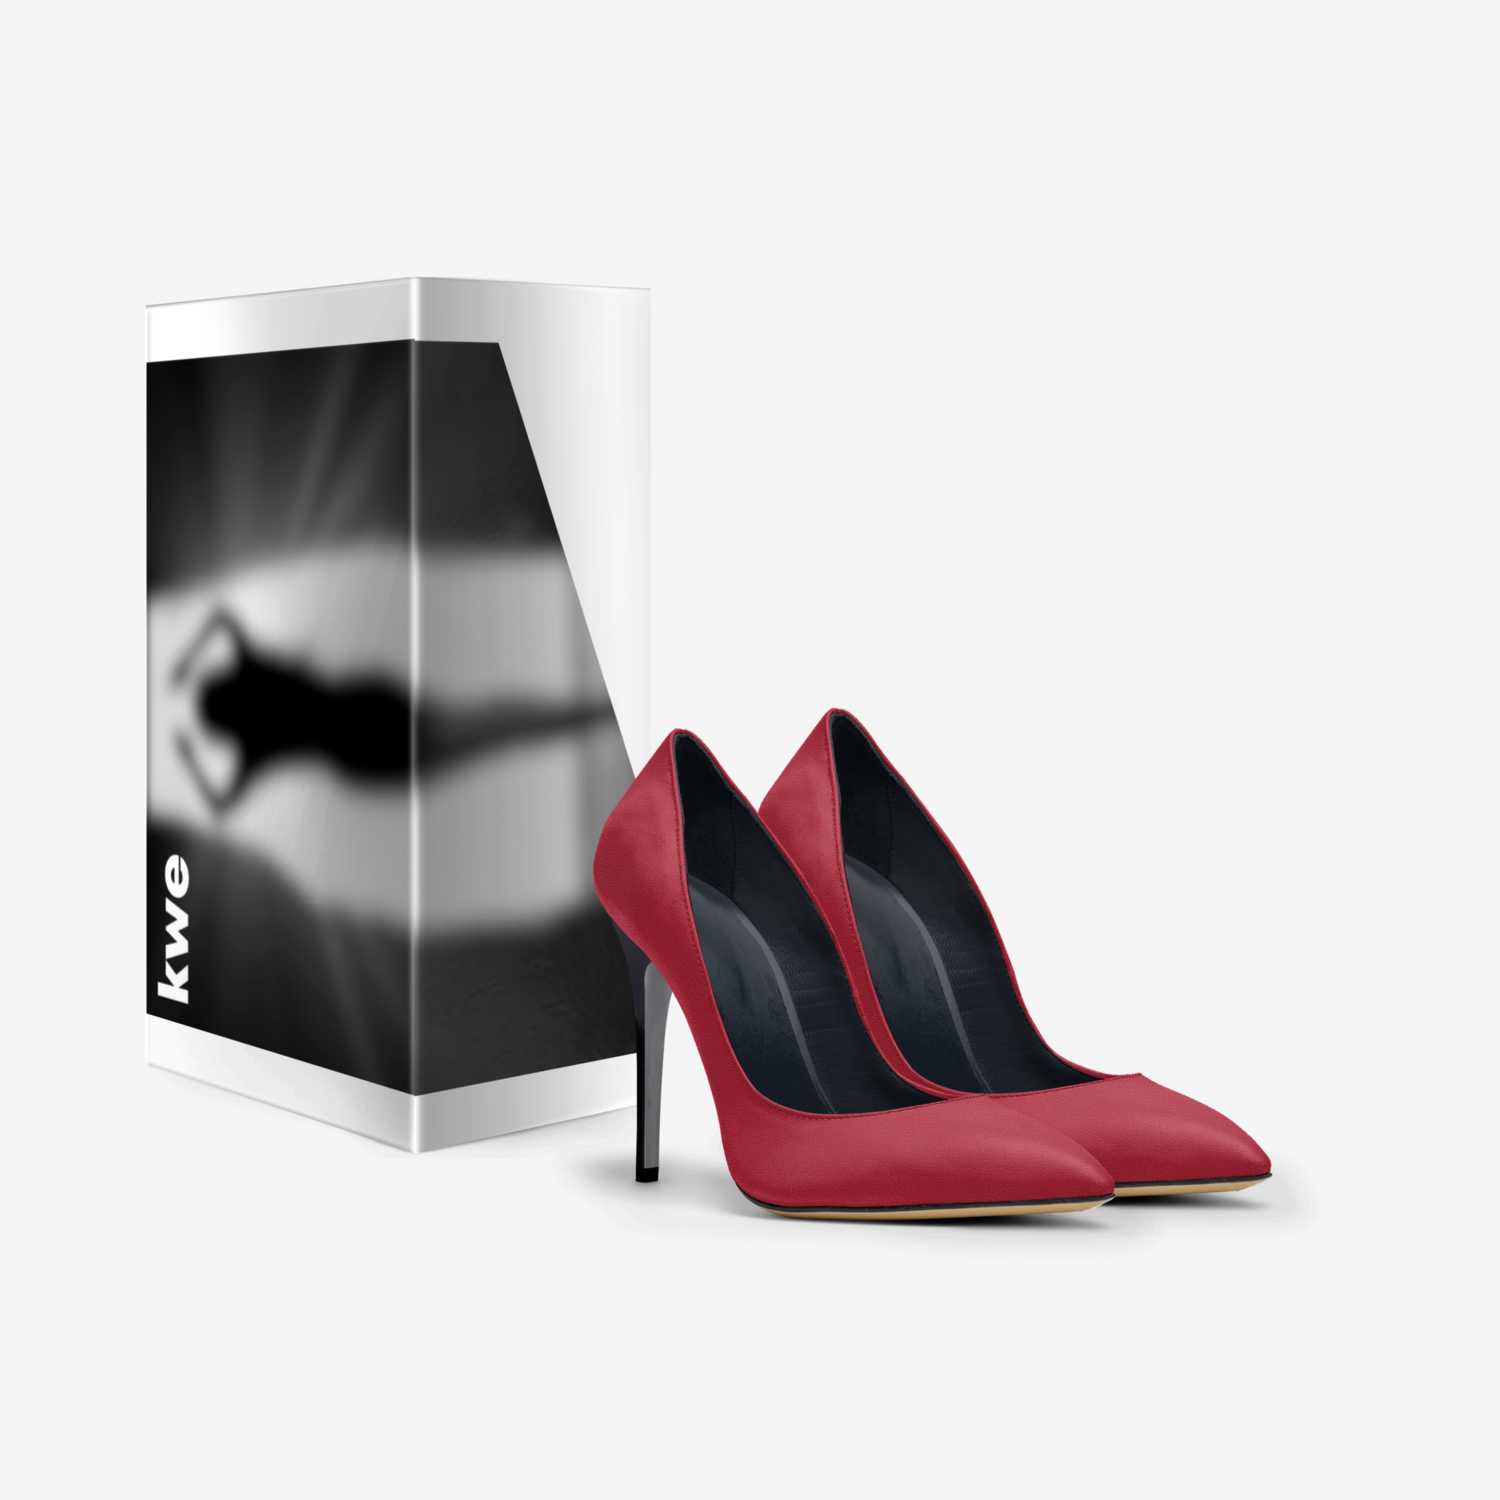 kwe custom made in Italy shoes by Rhonda Head | Box view